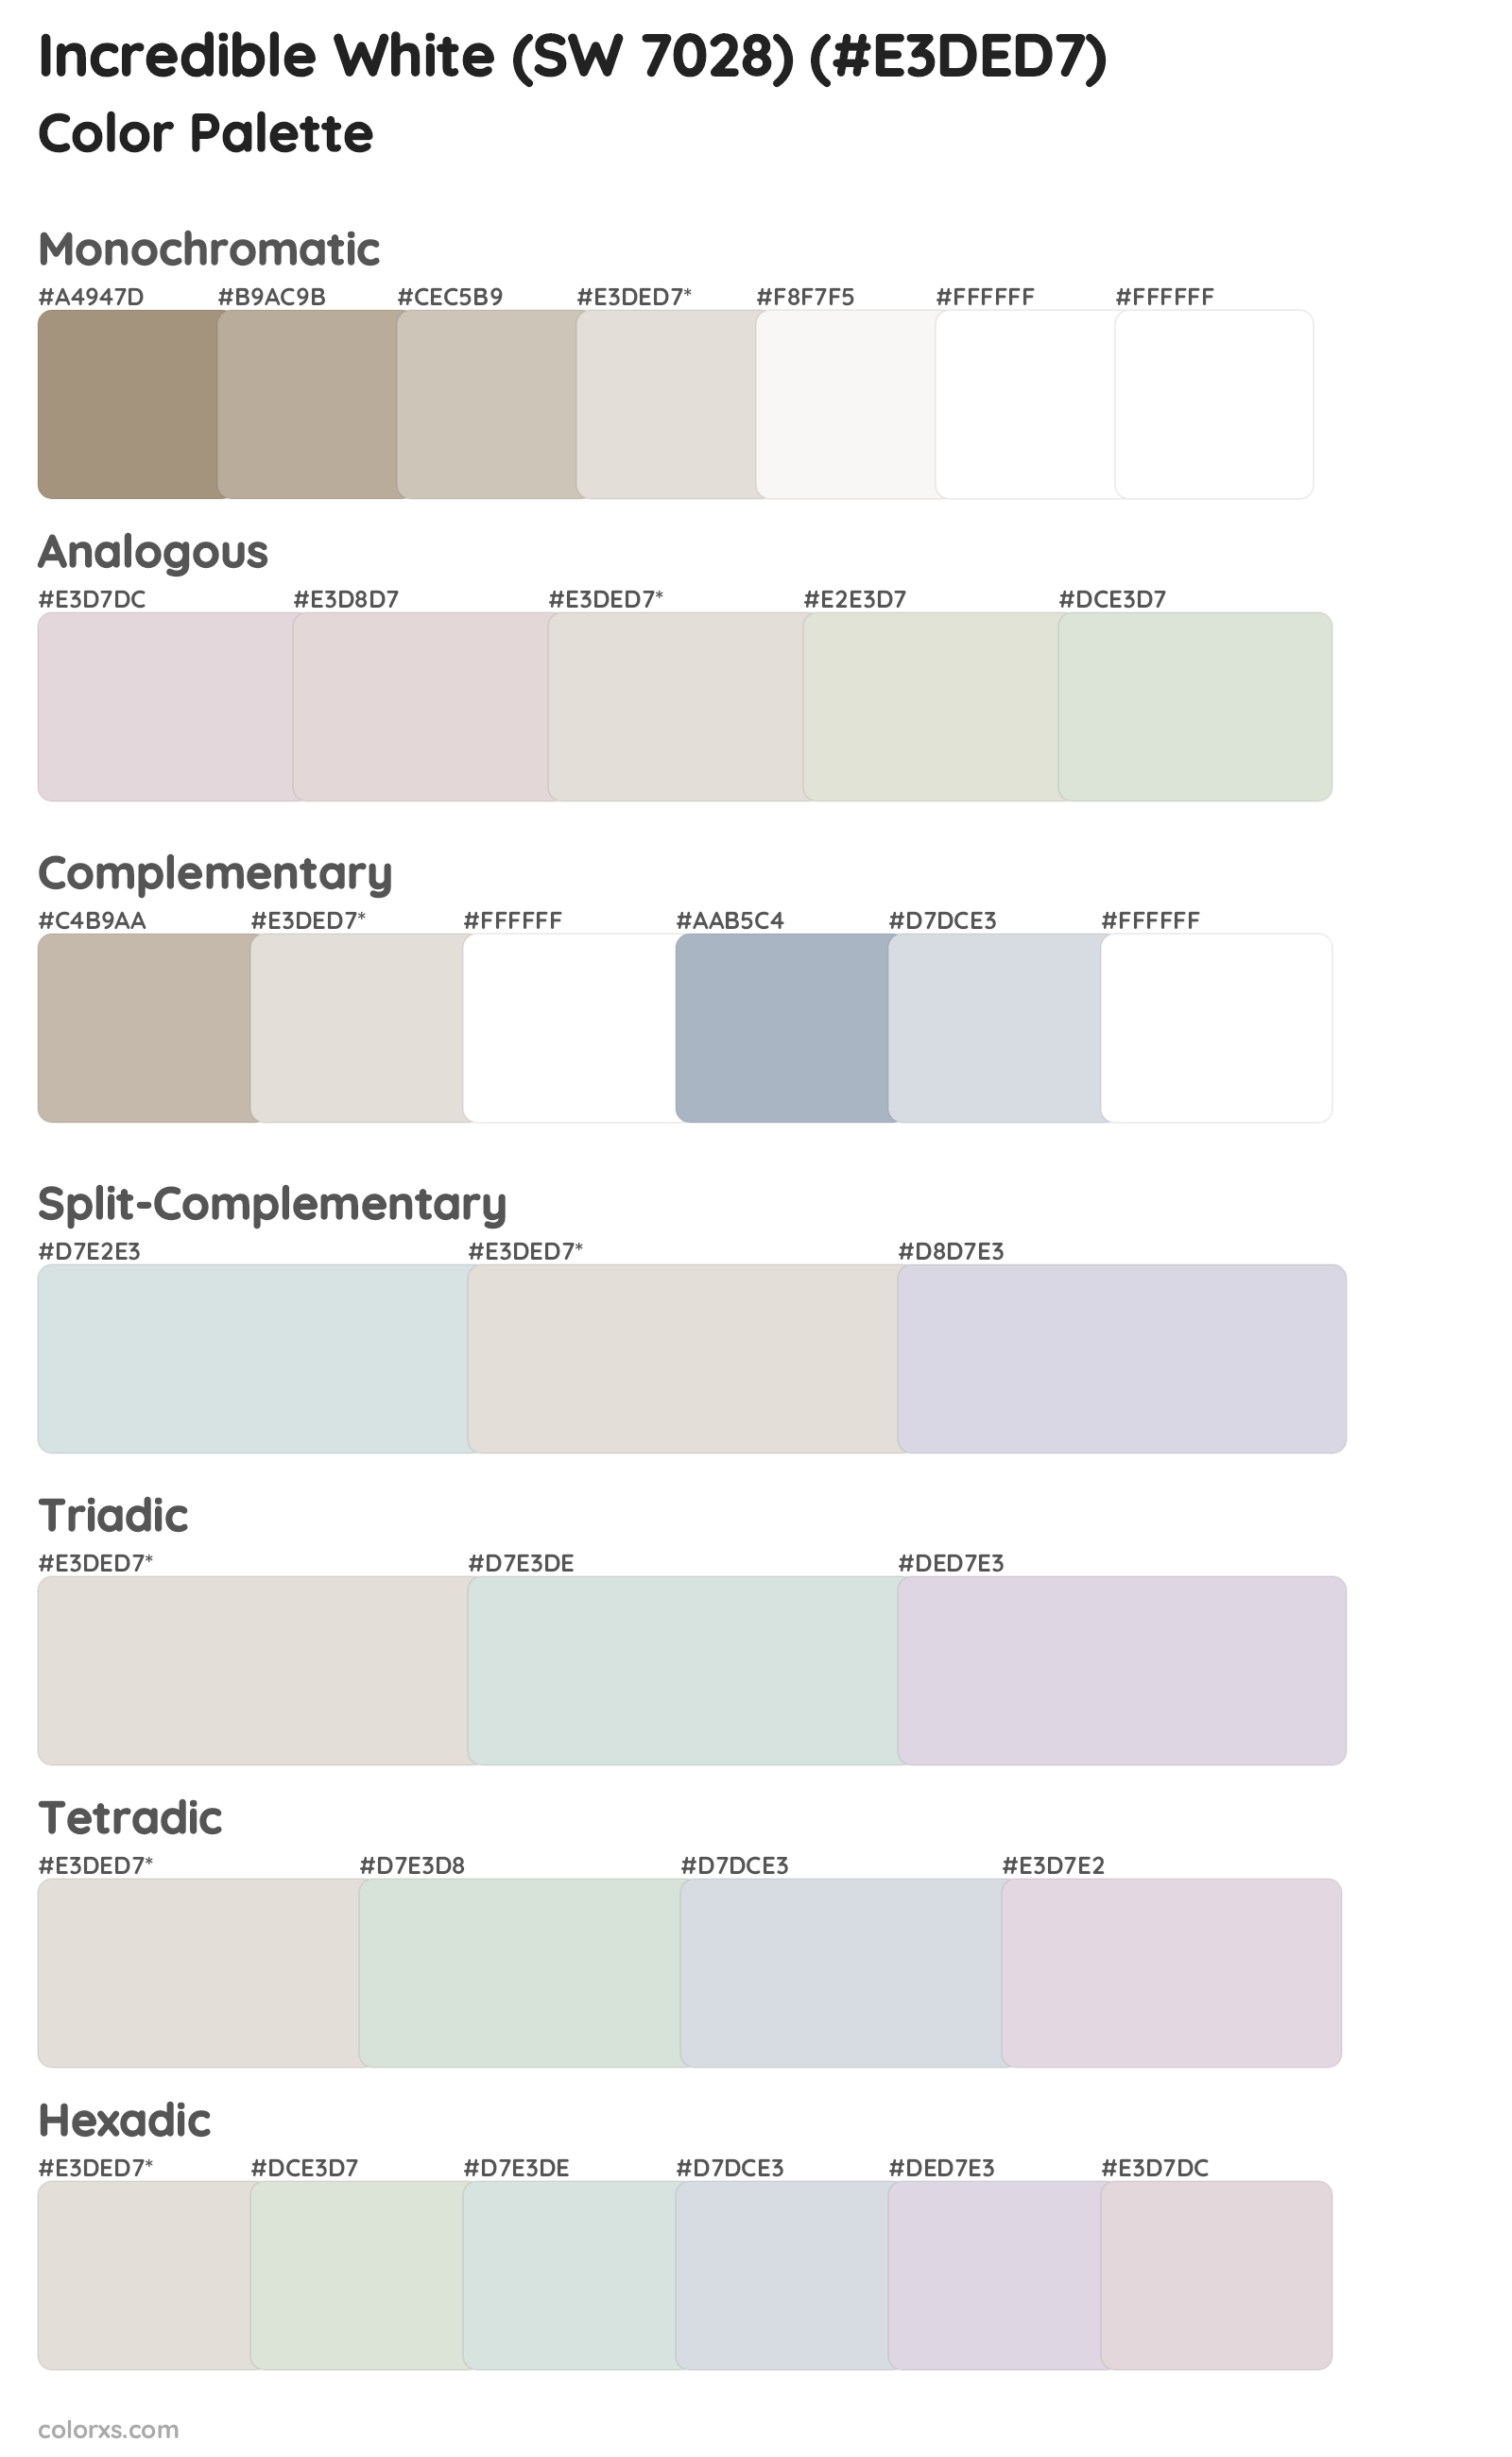 Incredible White (SW 7028) Color Scheme Palettes